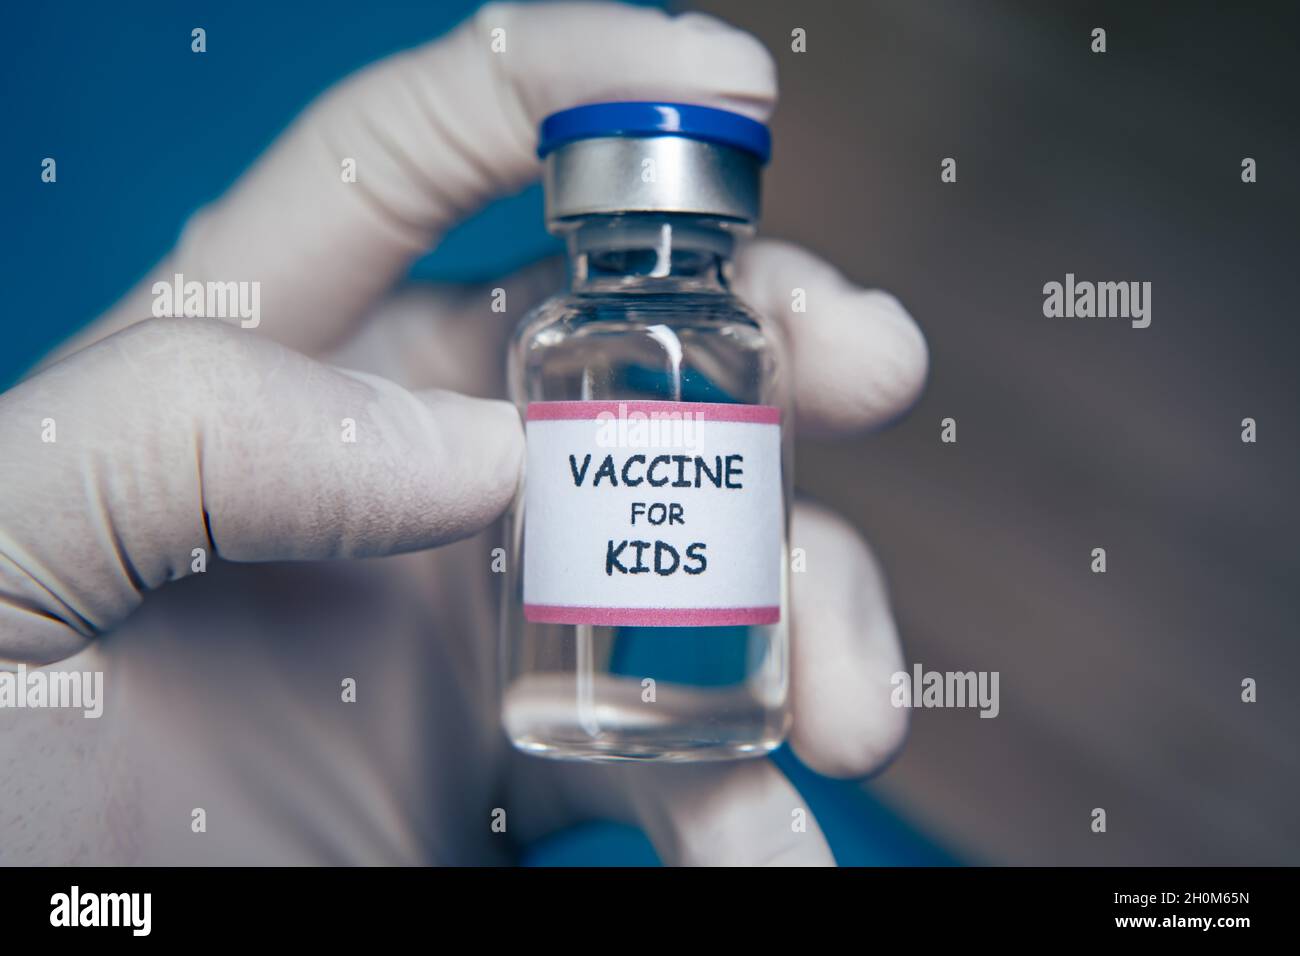 Covid-19 vaccine for kids concept Stock Photo